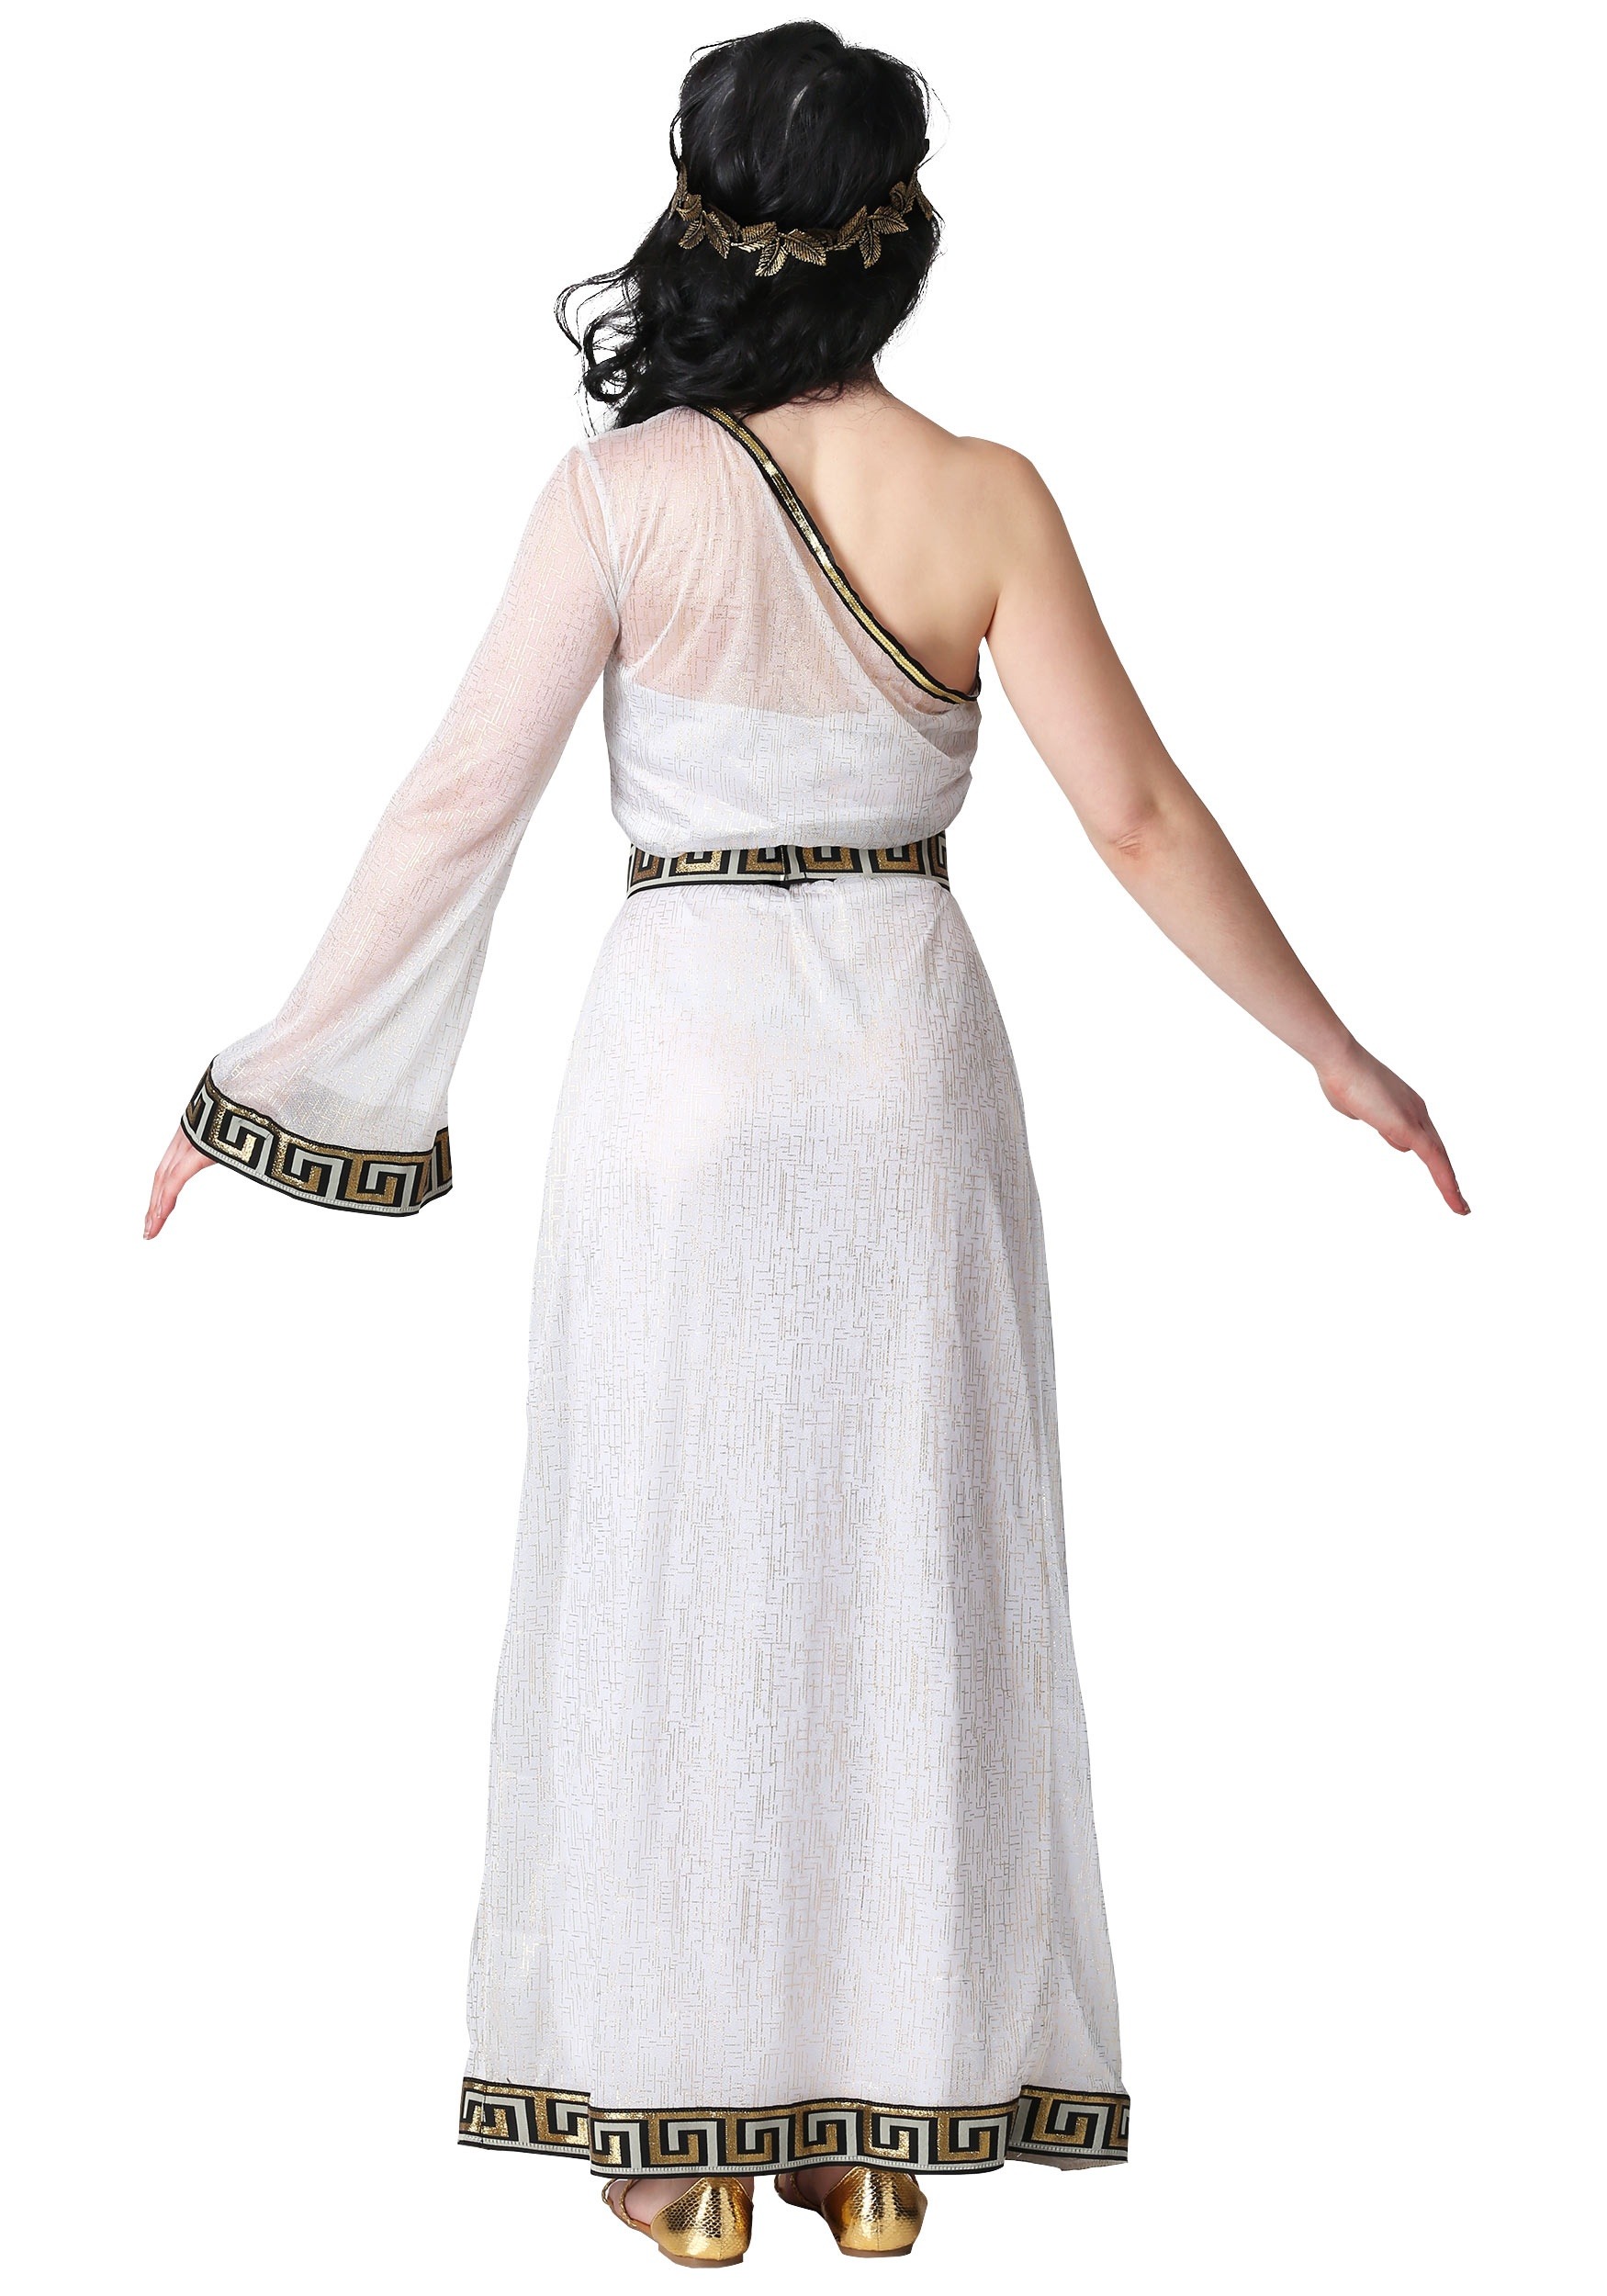 Grecian Goddess Costume